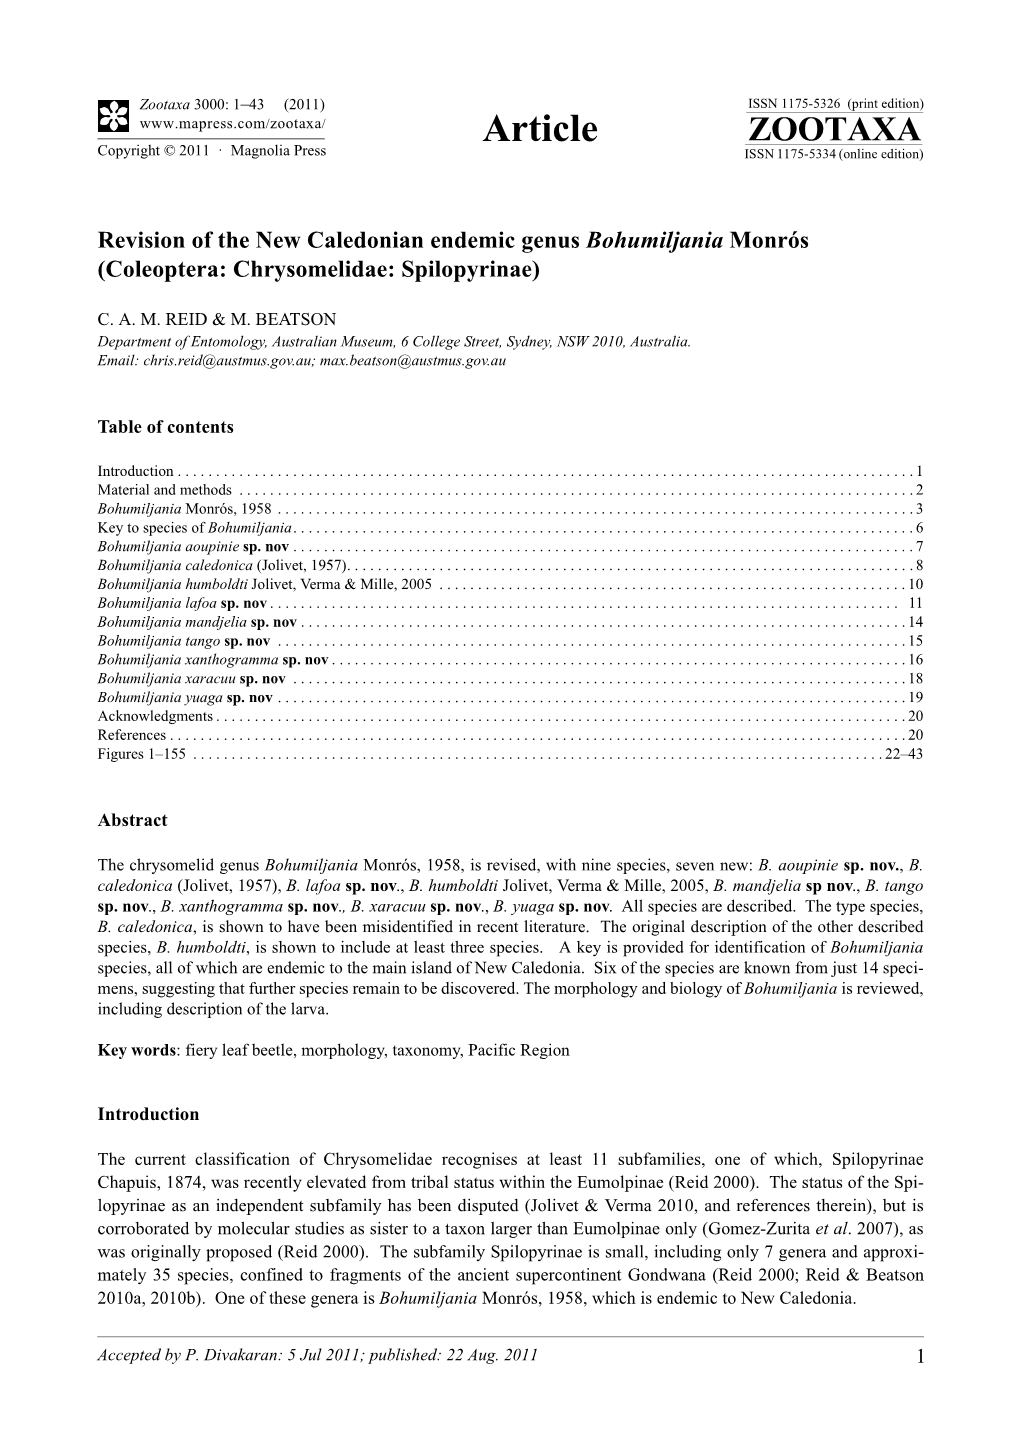 Revision of the New Caledonian Endemic Genus Bohumiljania Monrós (Coleoptera: Chrysomelidae: Spilopyrinae)